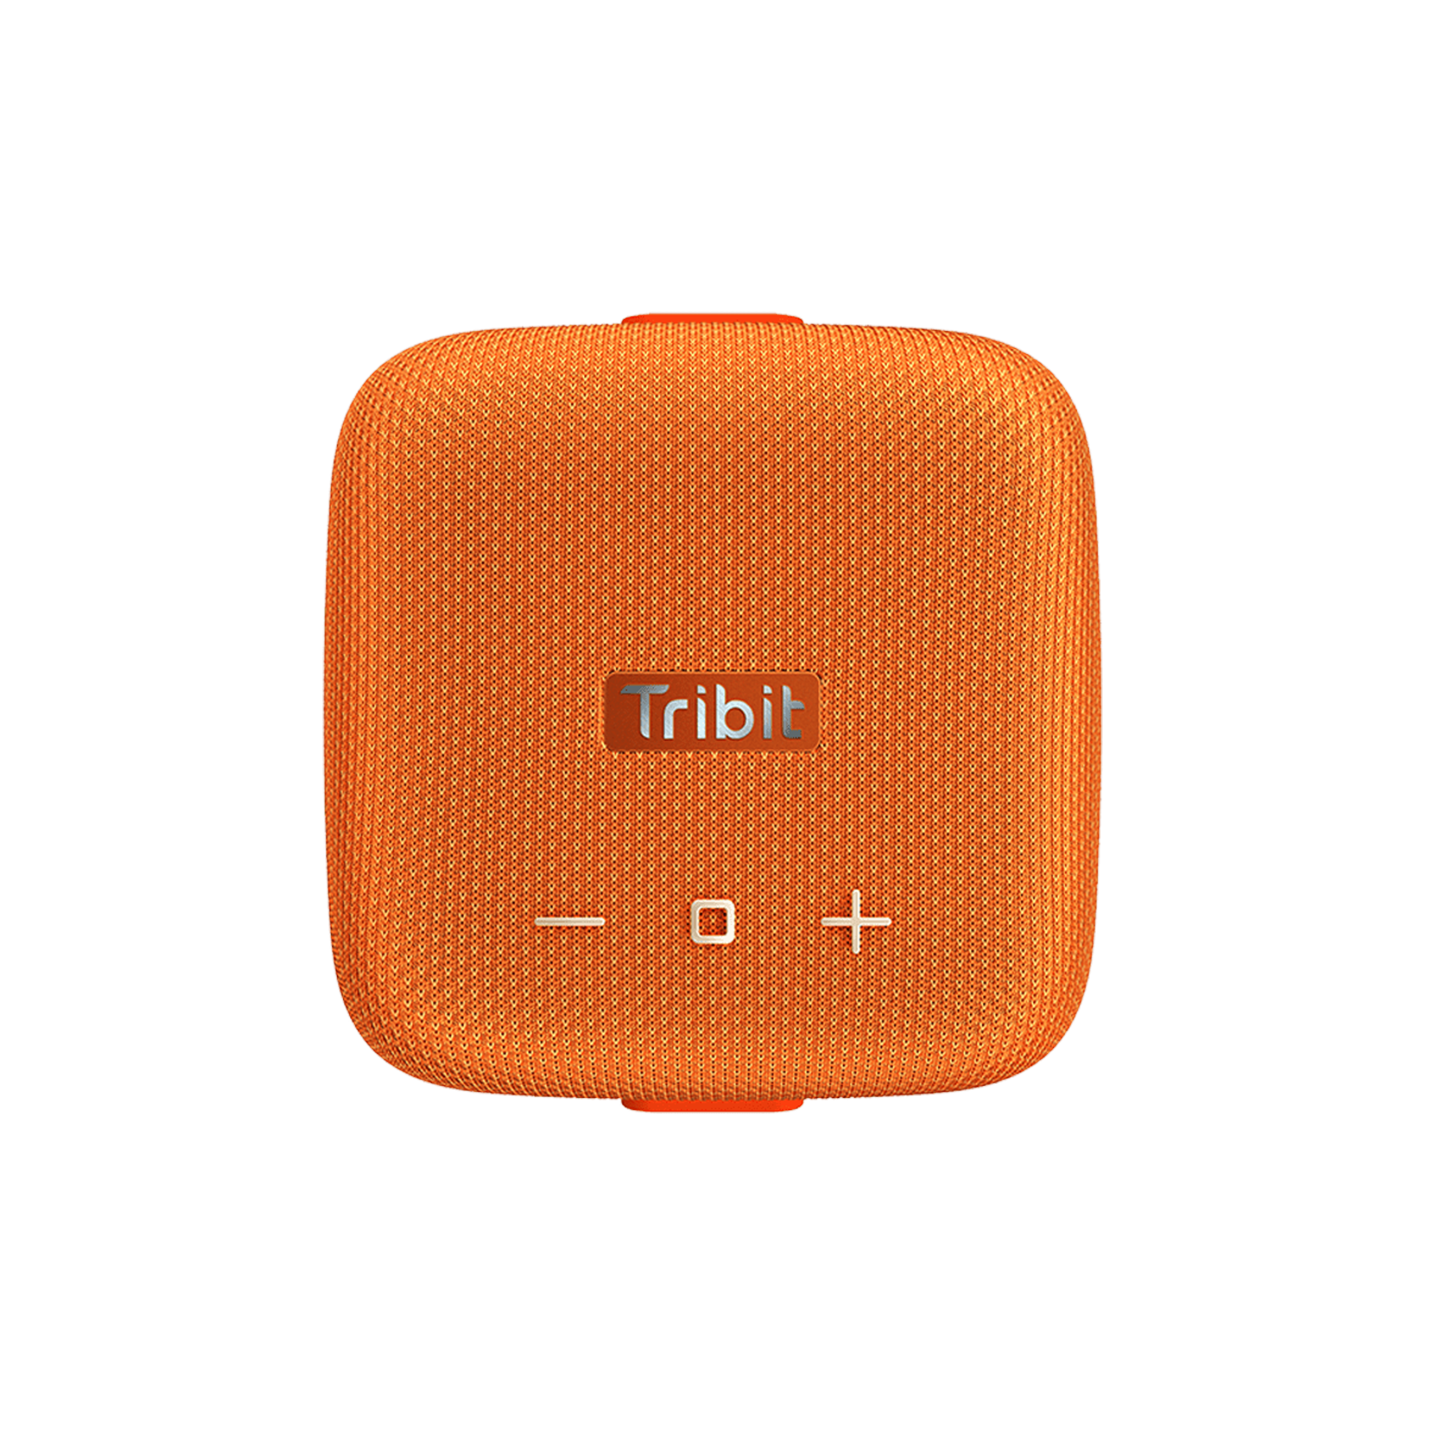 Tribit StormBox Micro Portable Speaker